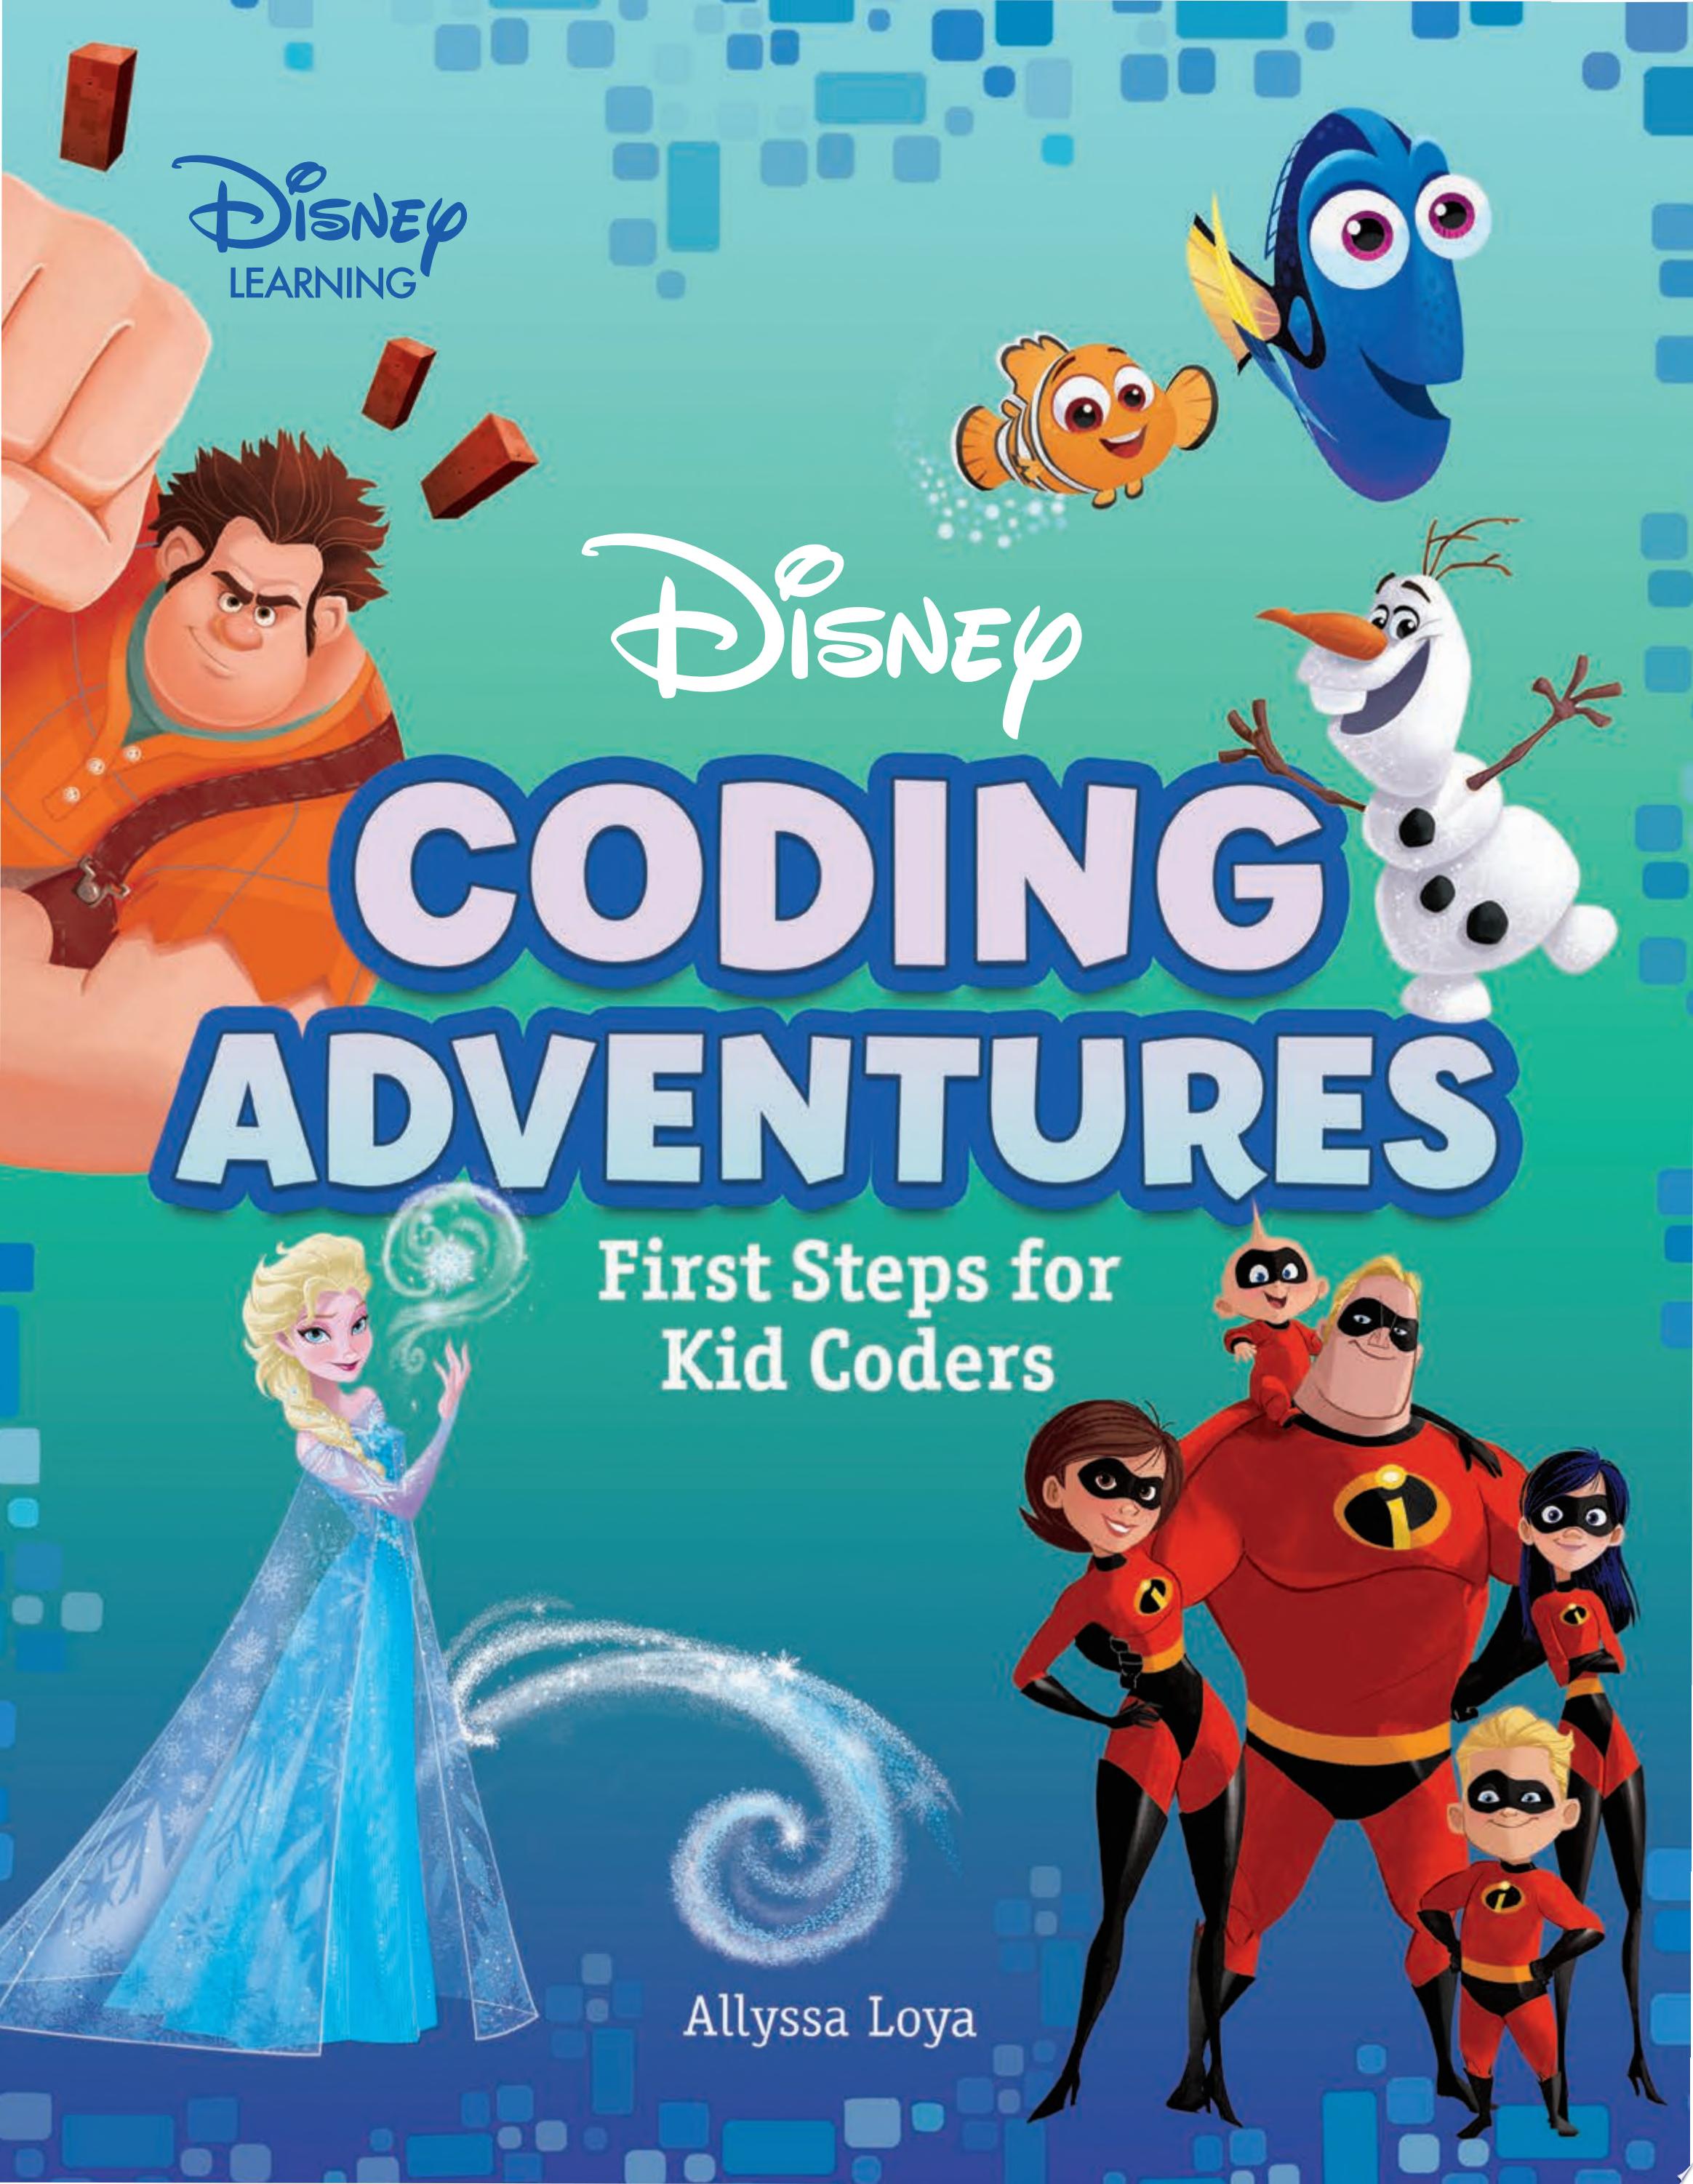 Image for "Disney Coding Adventures"